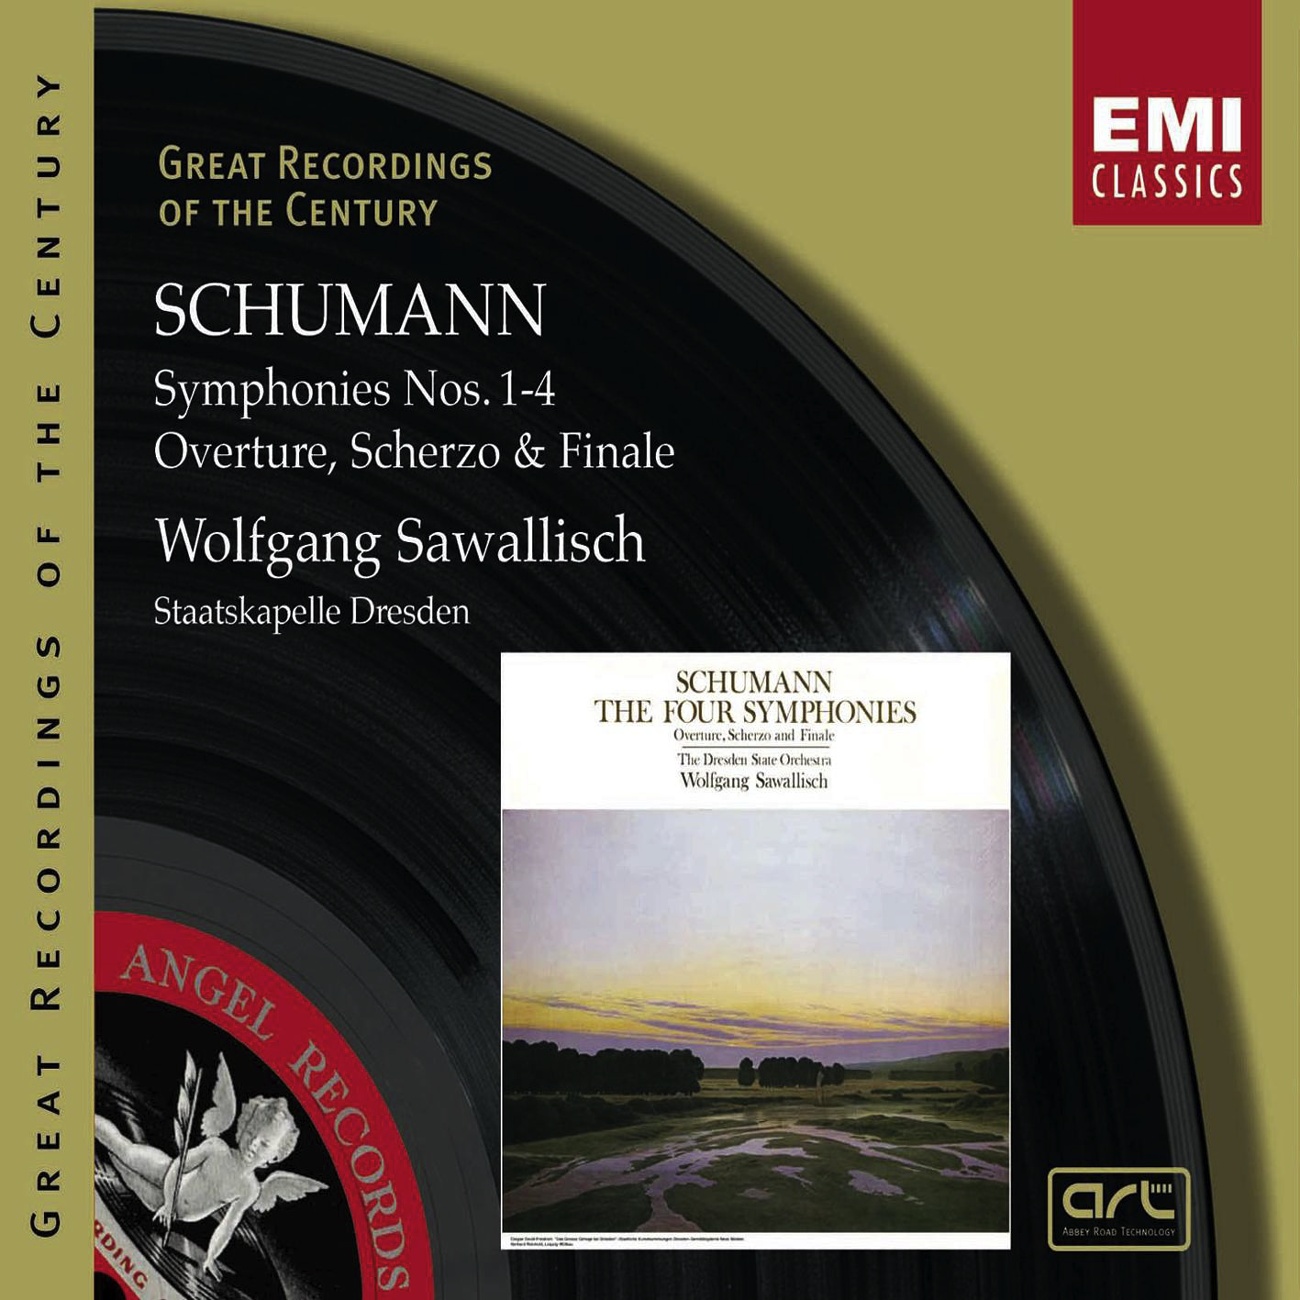 Overture, Scherzo and Finale Op. 52 (2001 Digital Remaster): Finale (Allegro molto vivace)